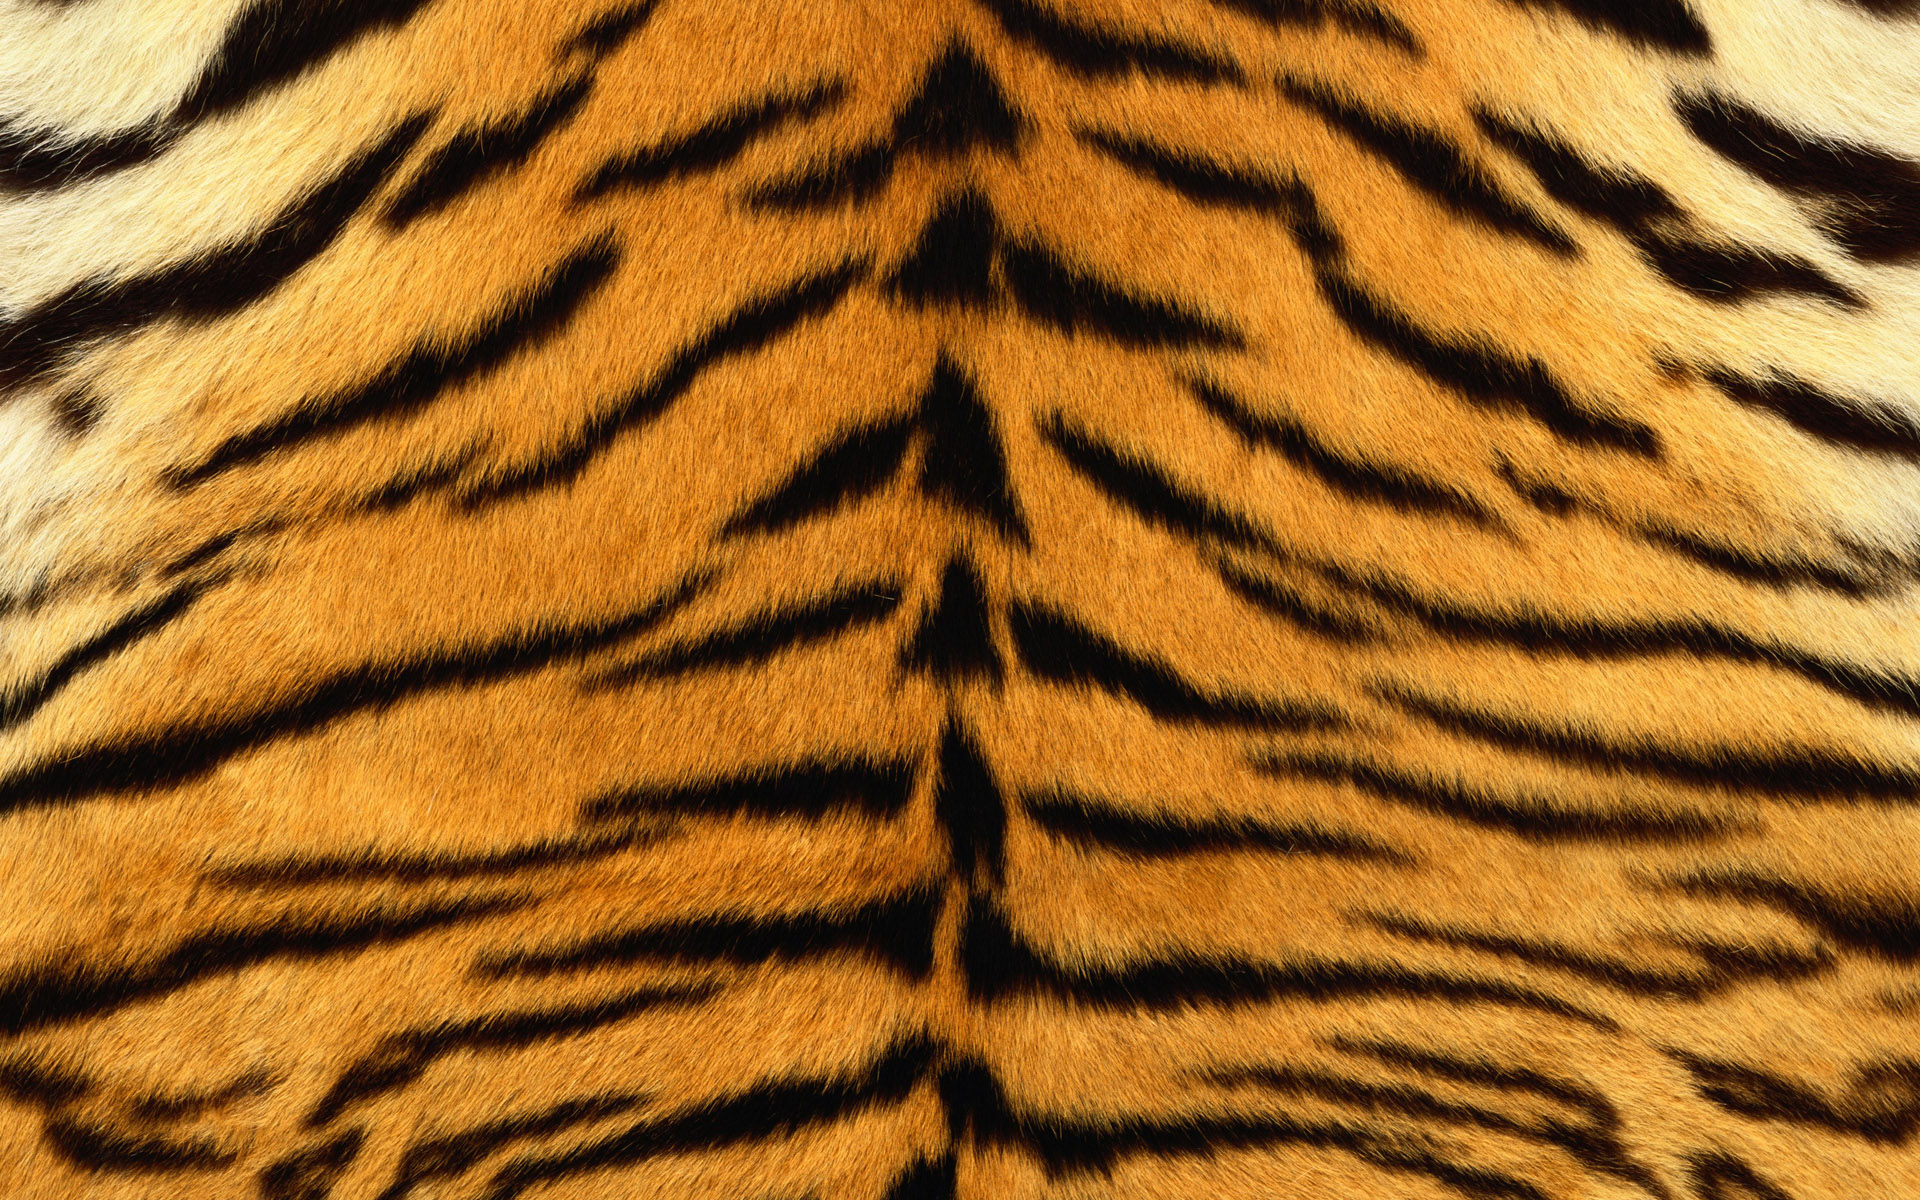 Tiger Print Wallpapers